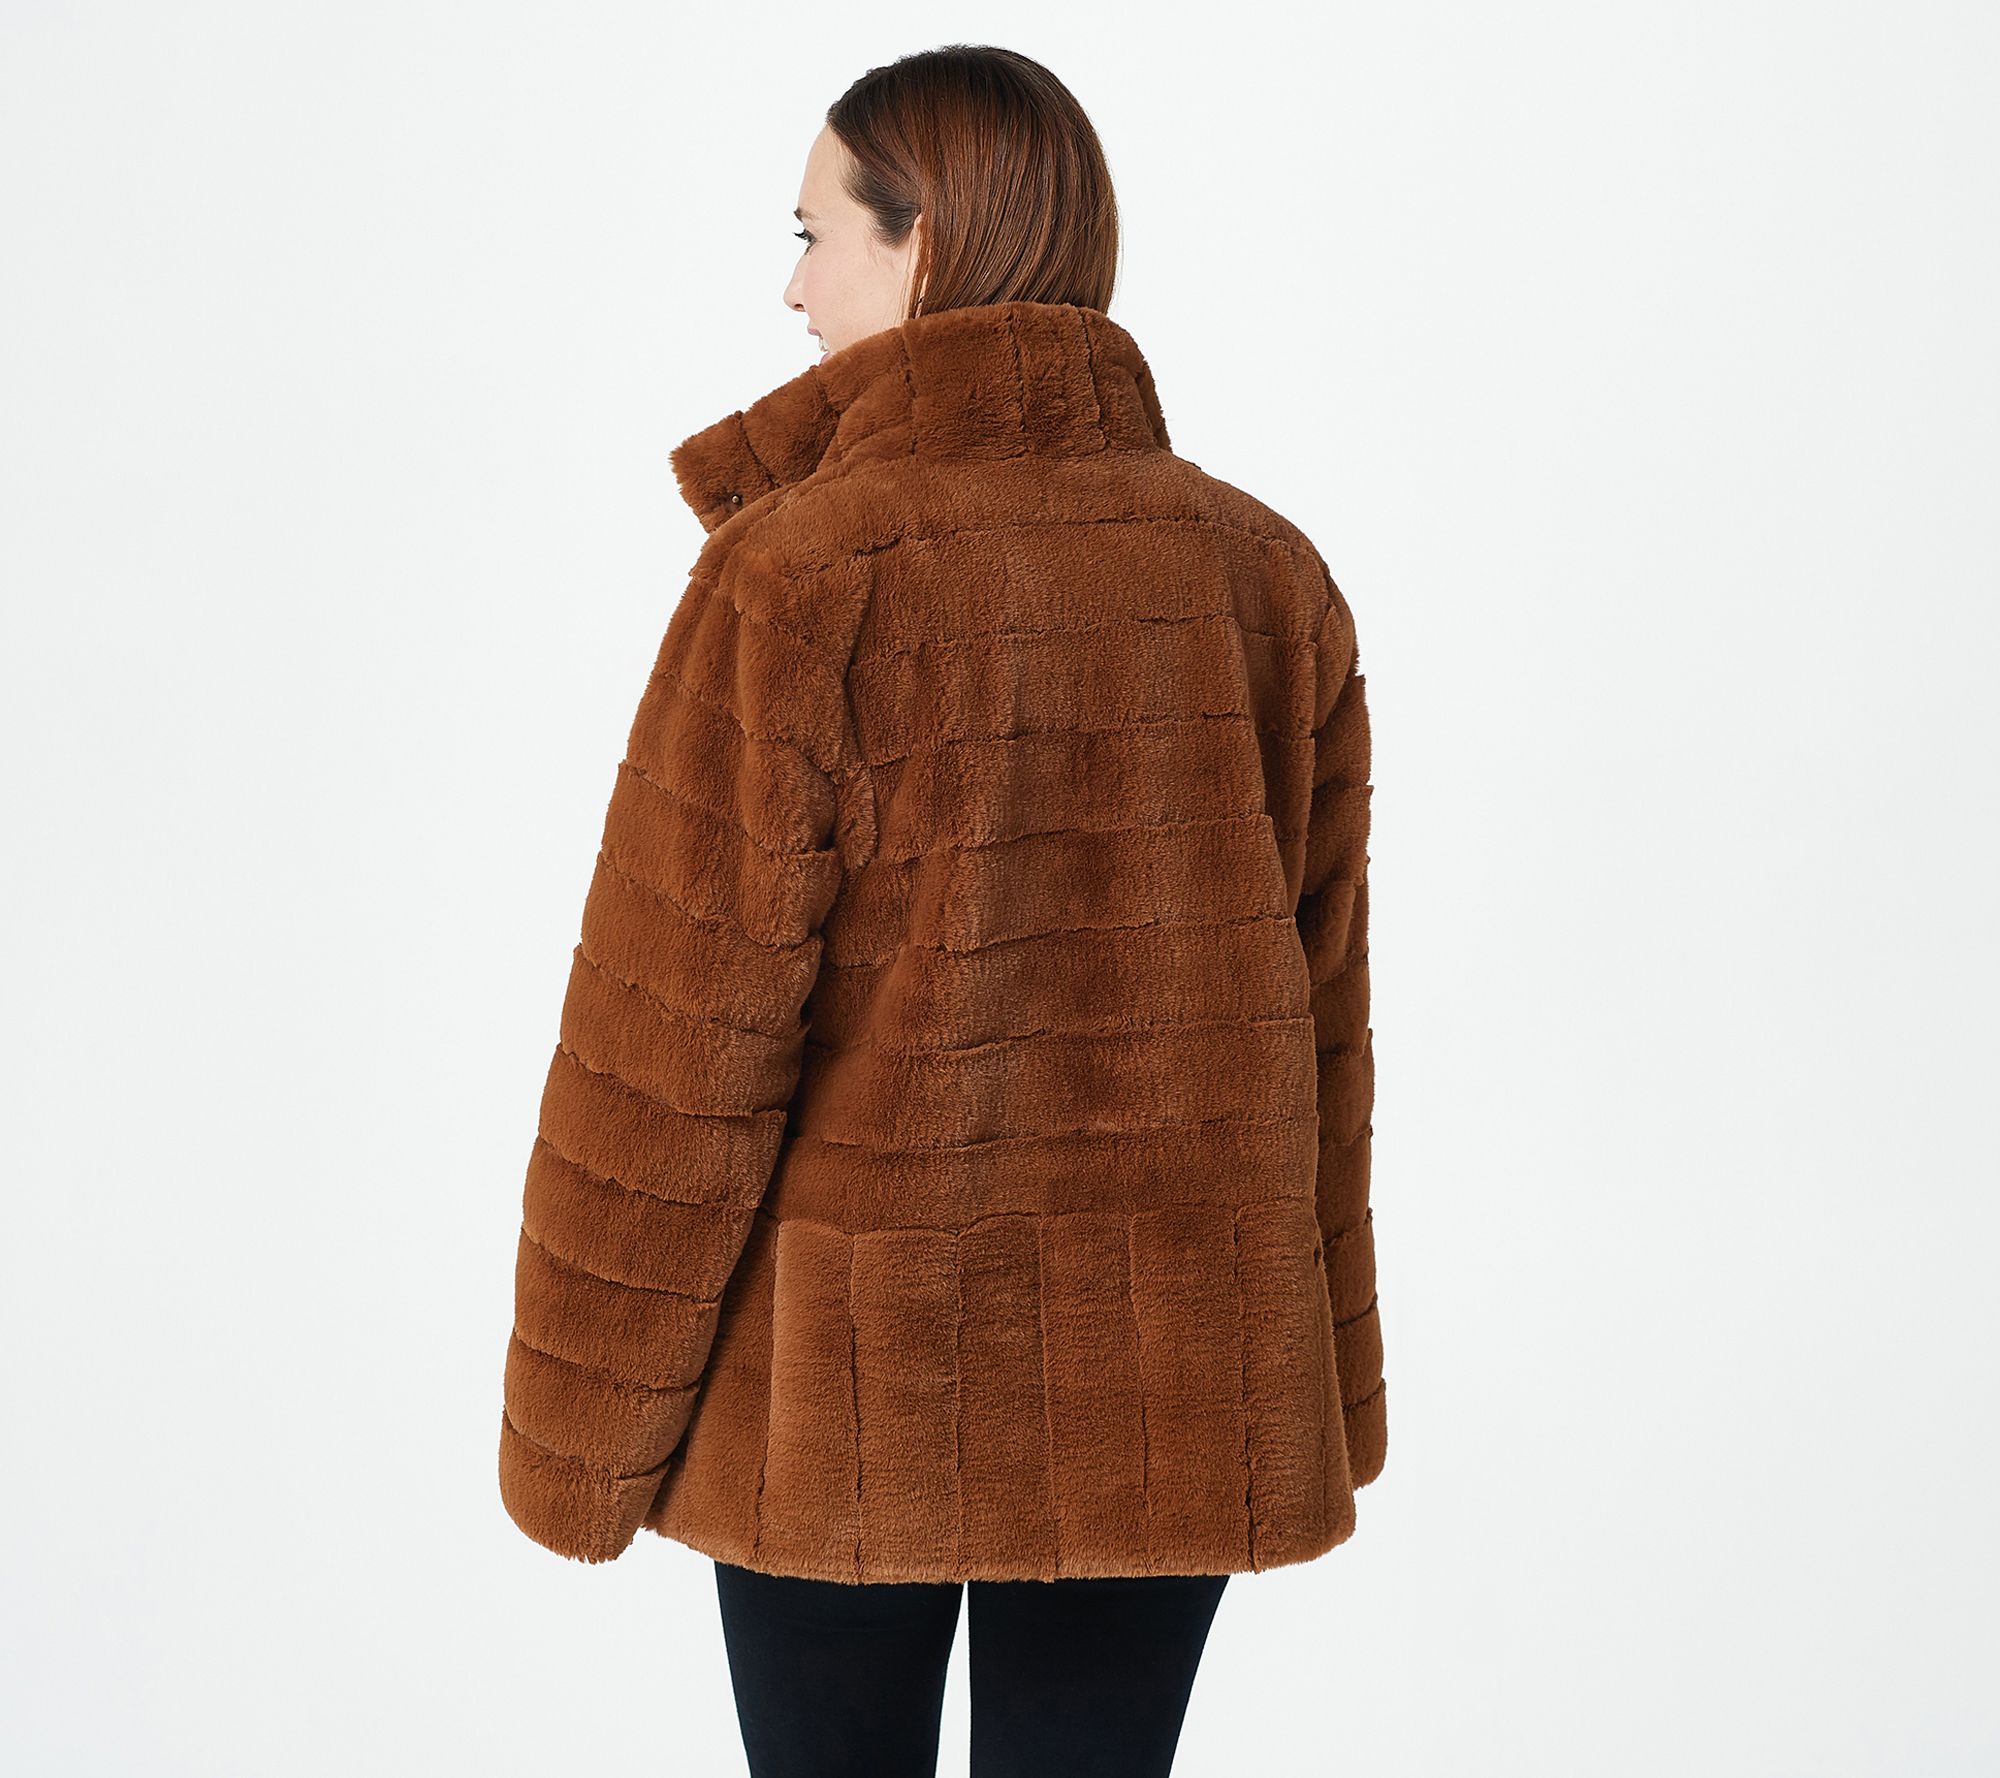 Dennis Basso Fake Fur Coat light orange-brown casual look Fashion Coats Fake Fur Coats 